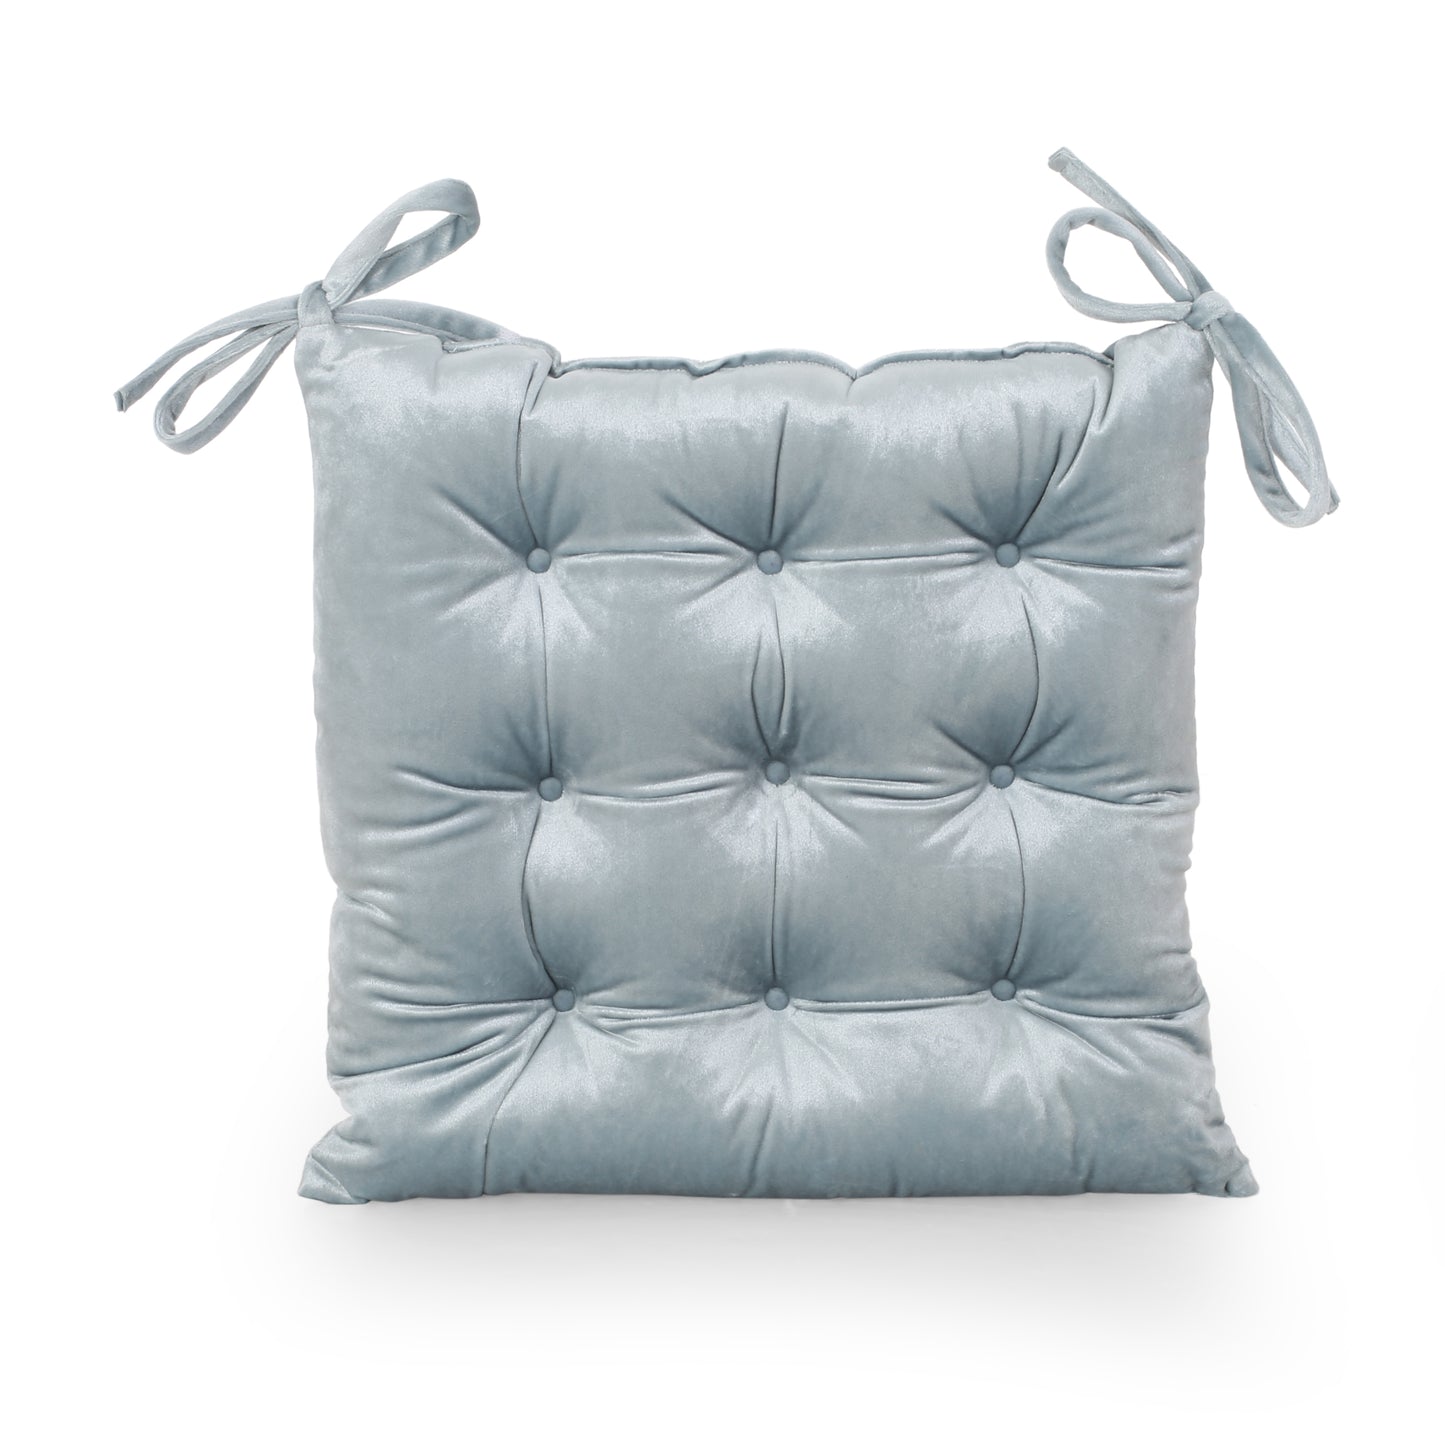 Asma Tufted Velvet Dining Chair Cushion Pads (Set of 4)